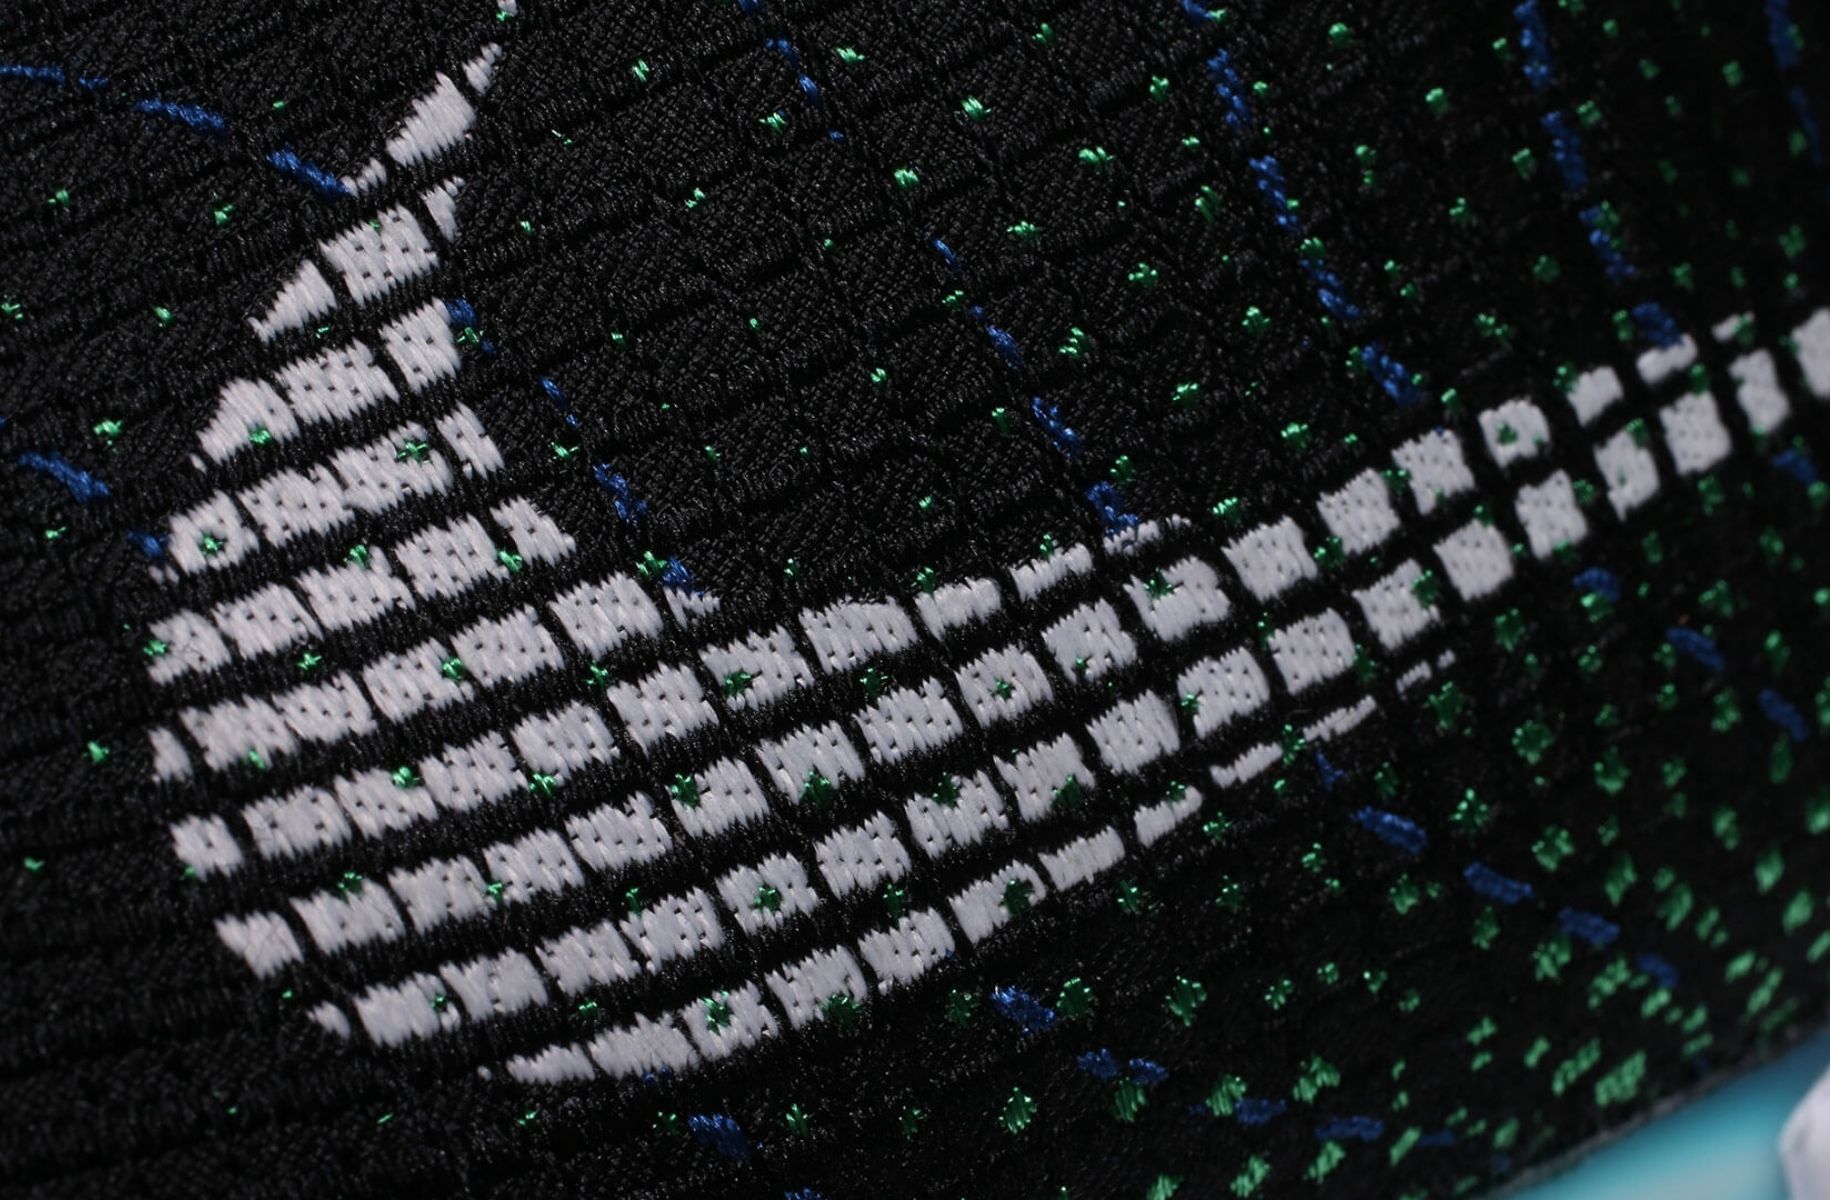 close up Nike swoosh logo woven into side of shoe